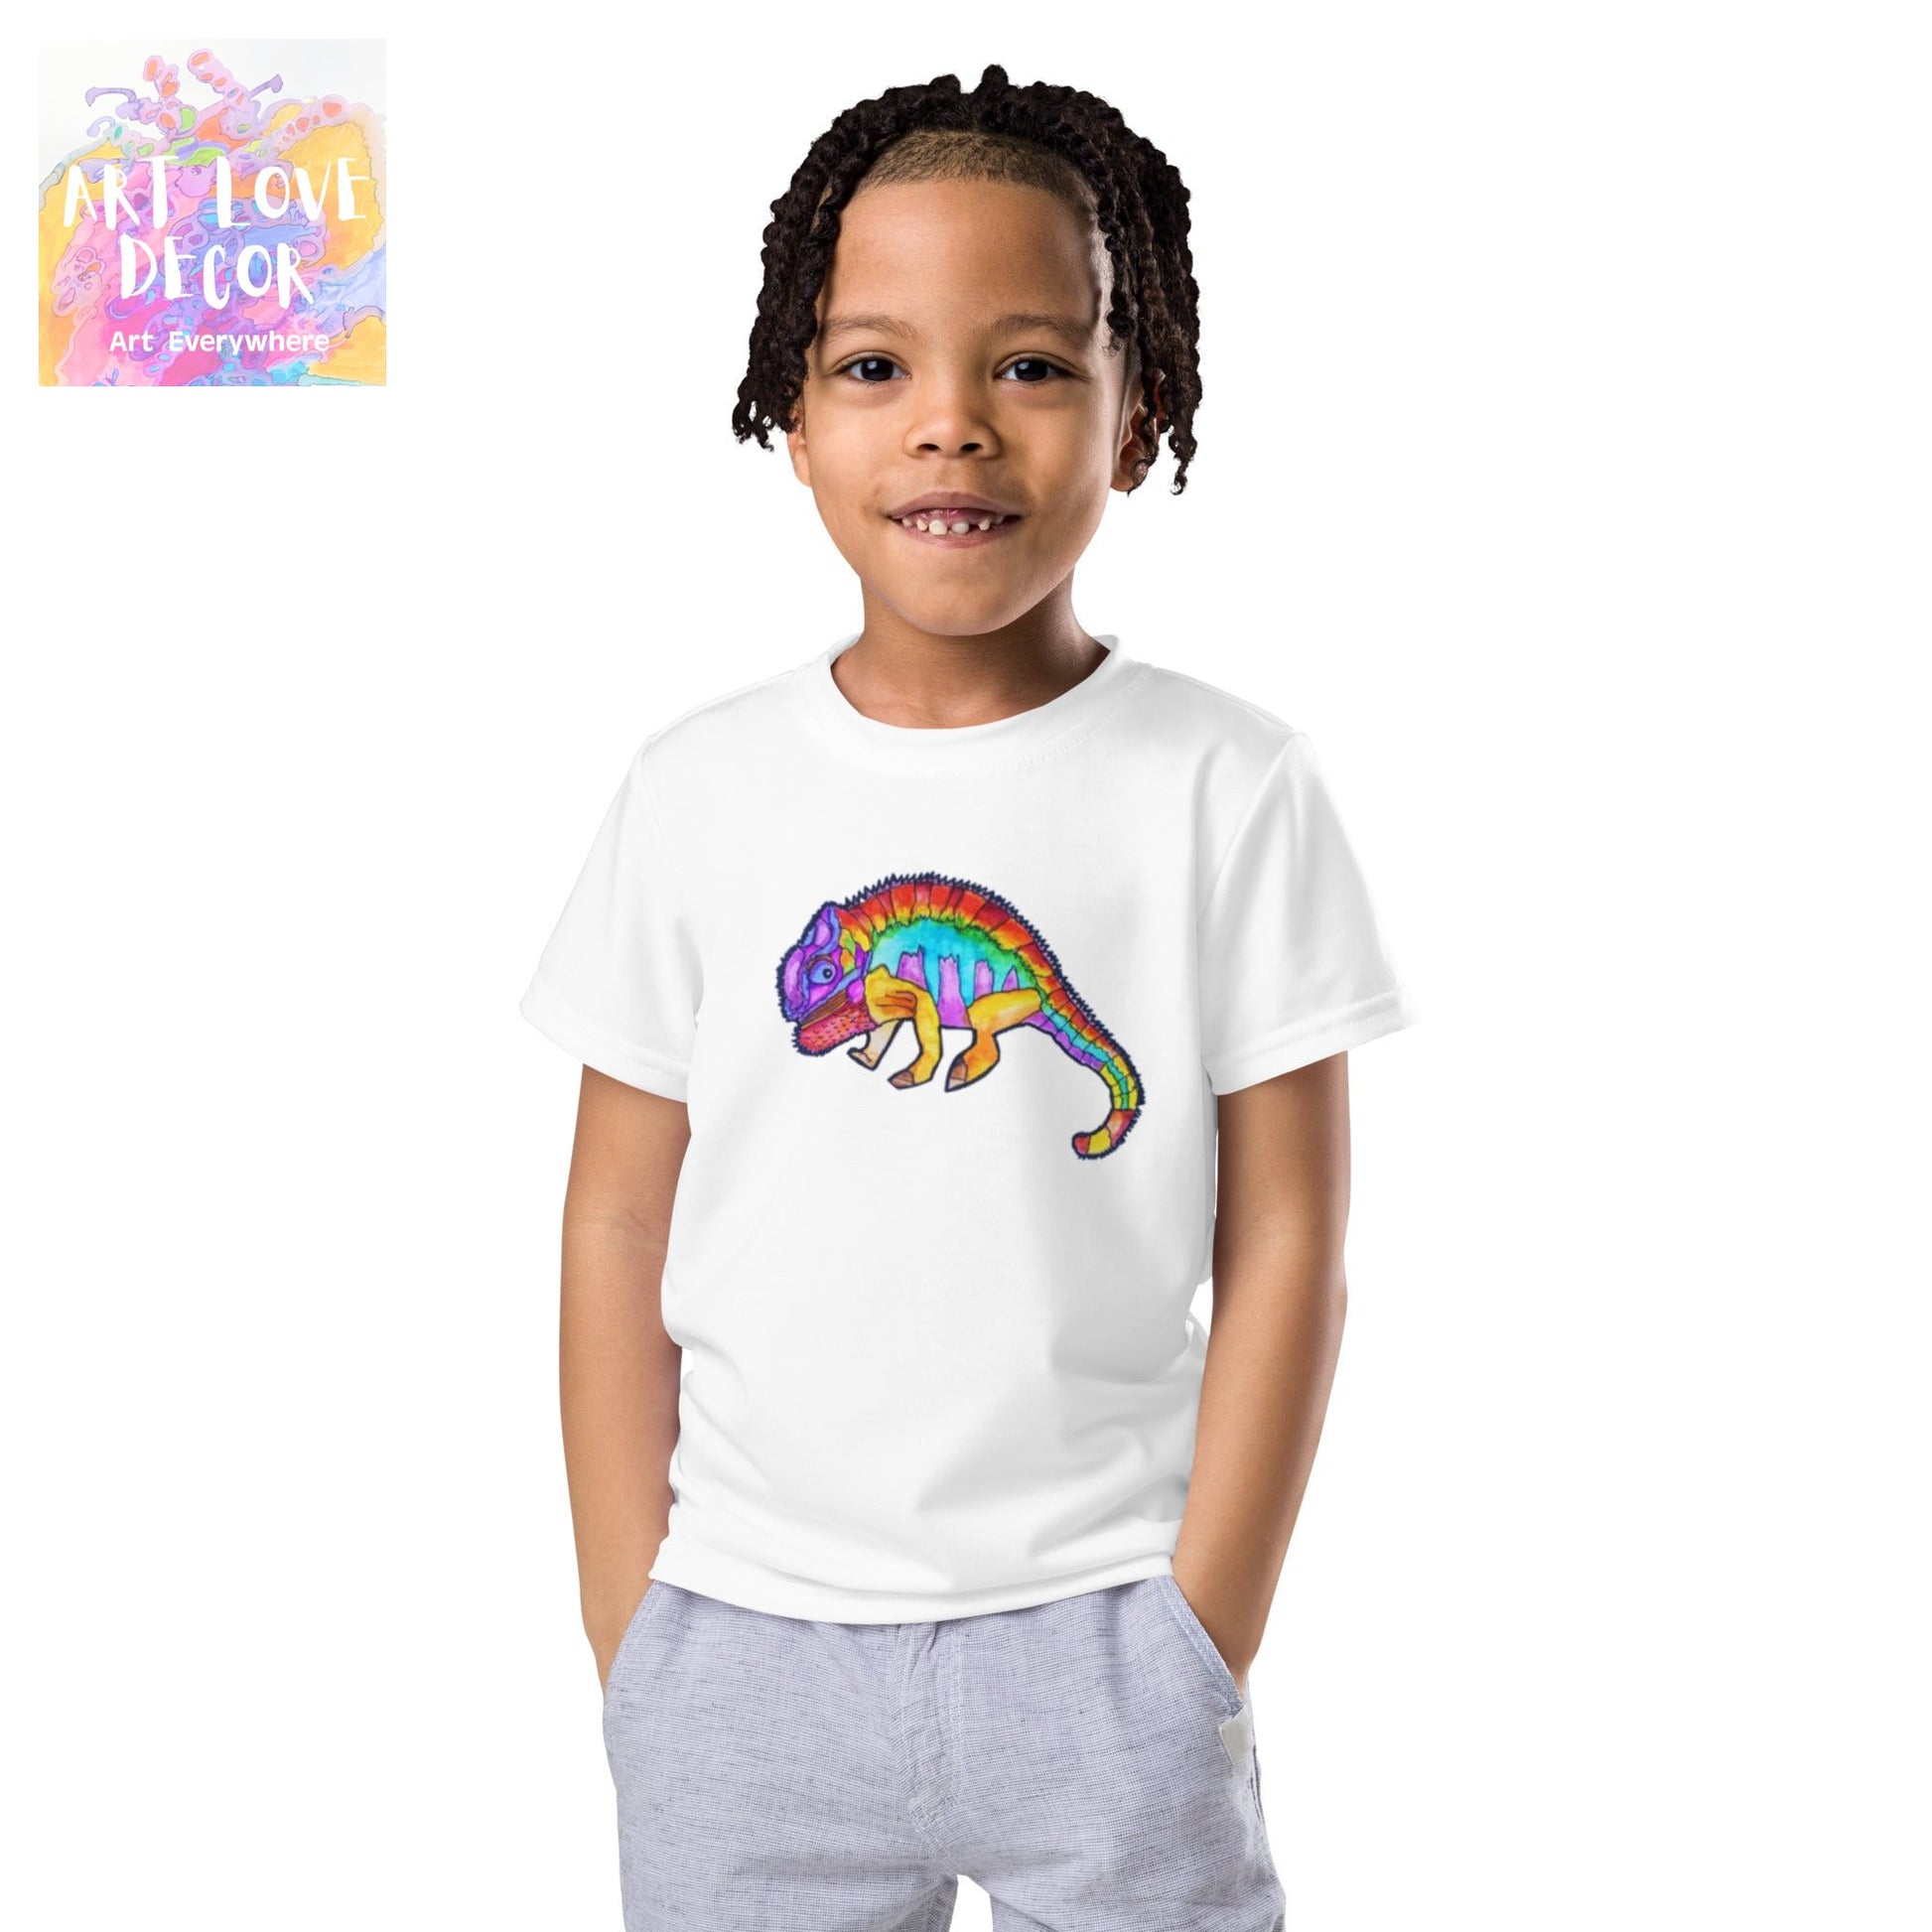 Color Lizard Kid's T-Shirt - Art Love Decor